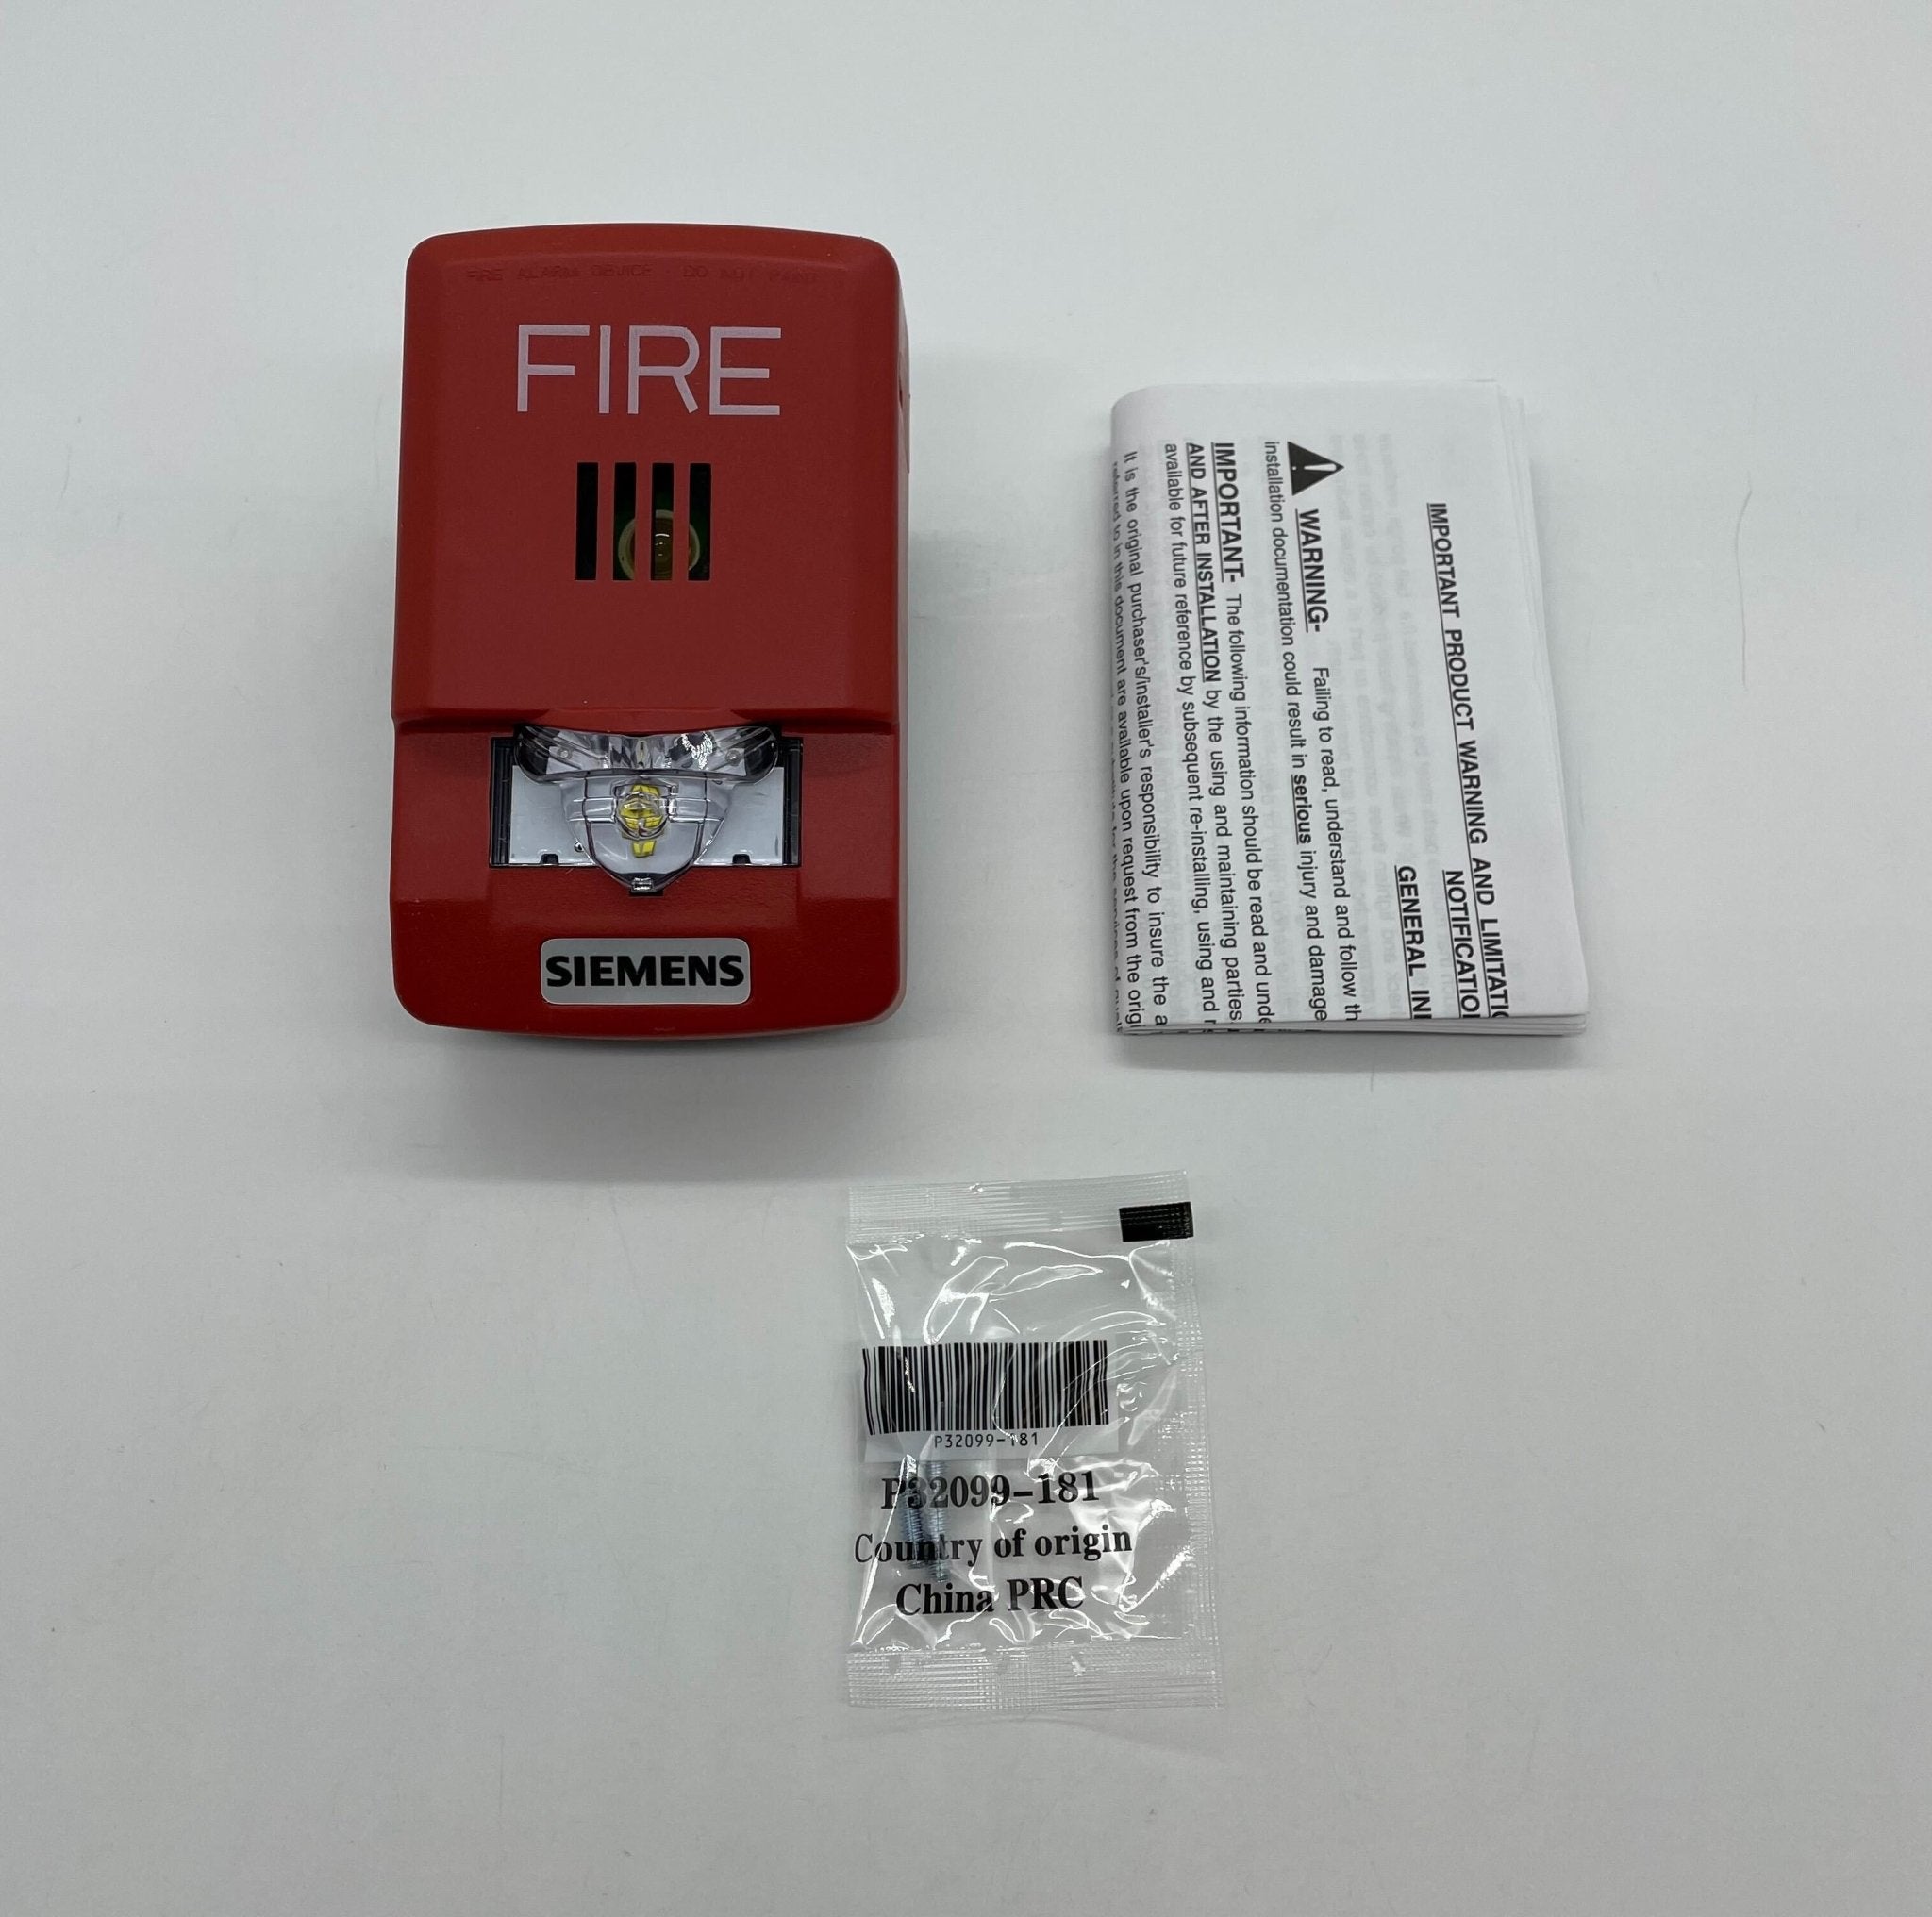 Siemens SLHSWR-F - The Fire Alarm Supplier